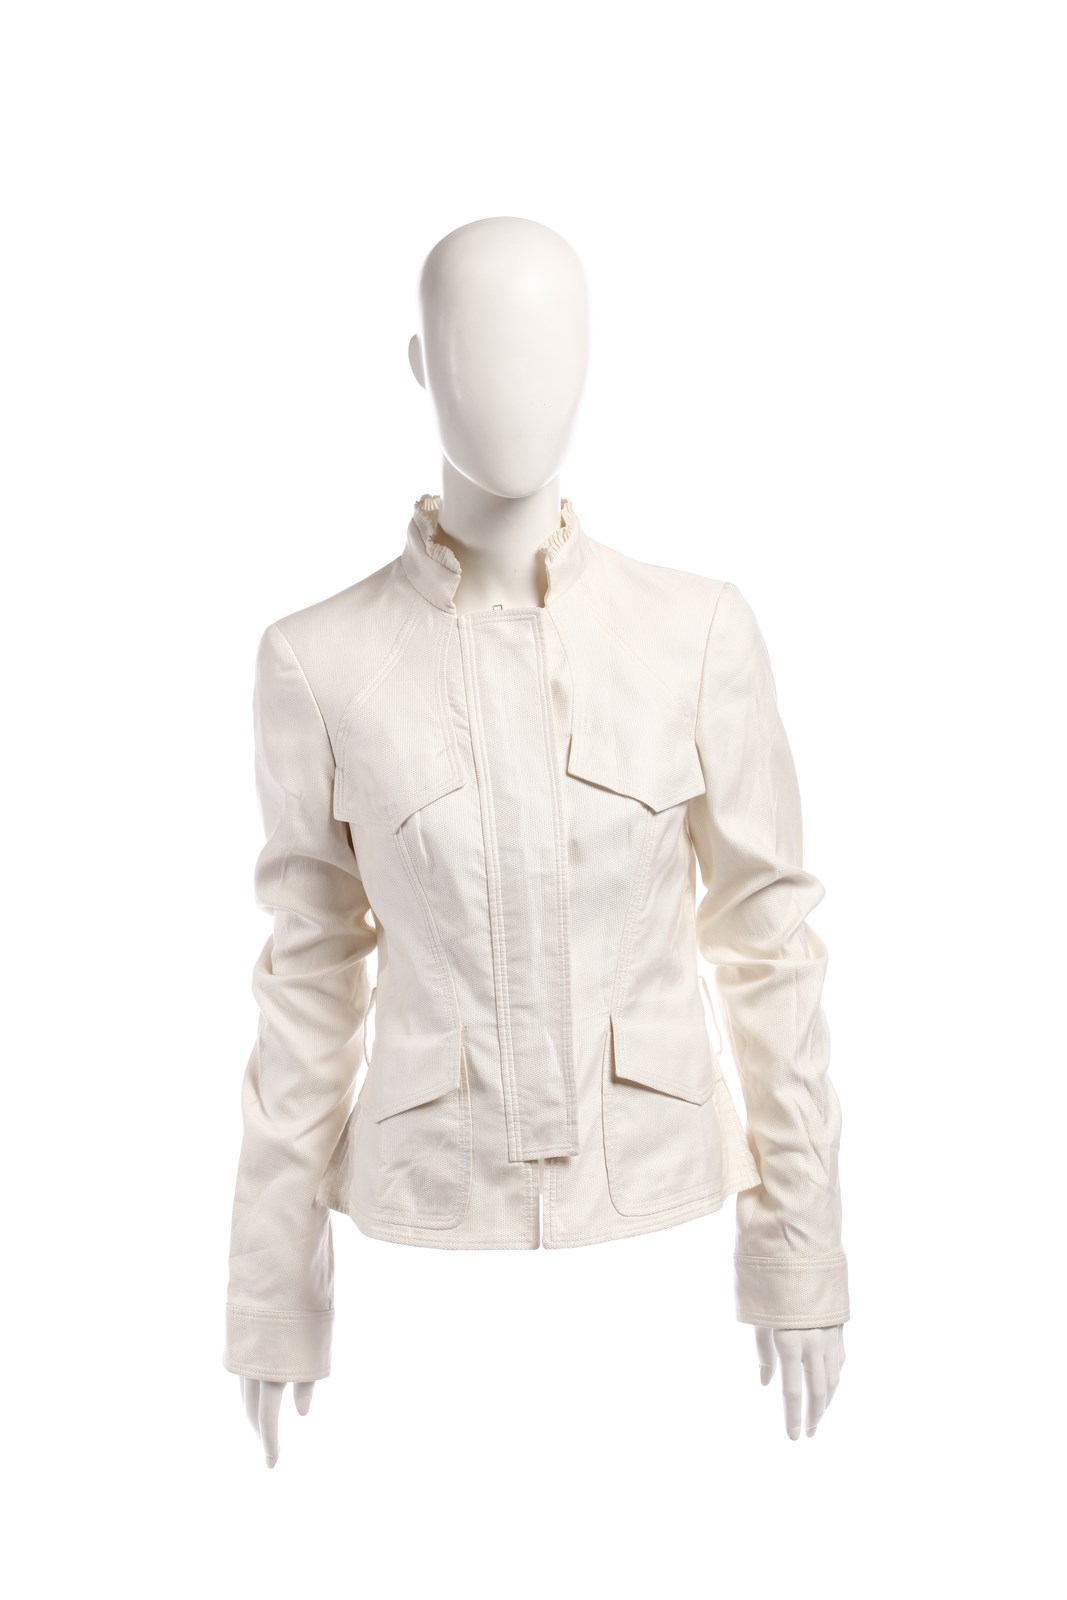 White jacket. (Gucci )